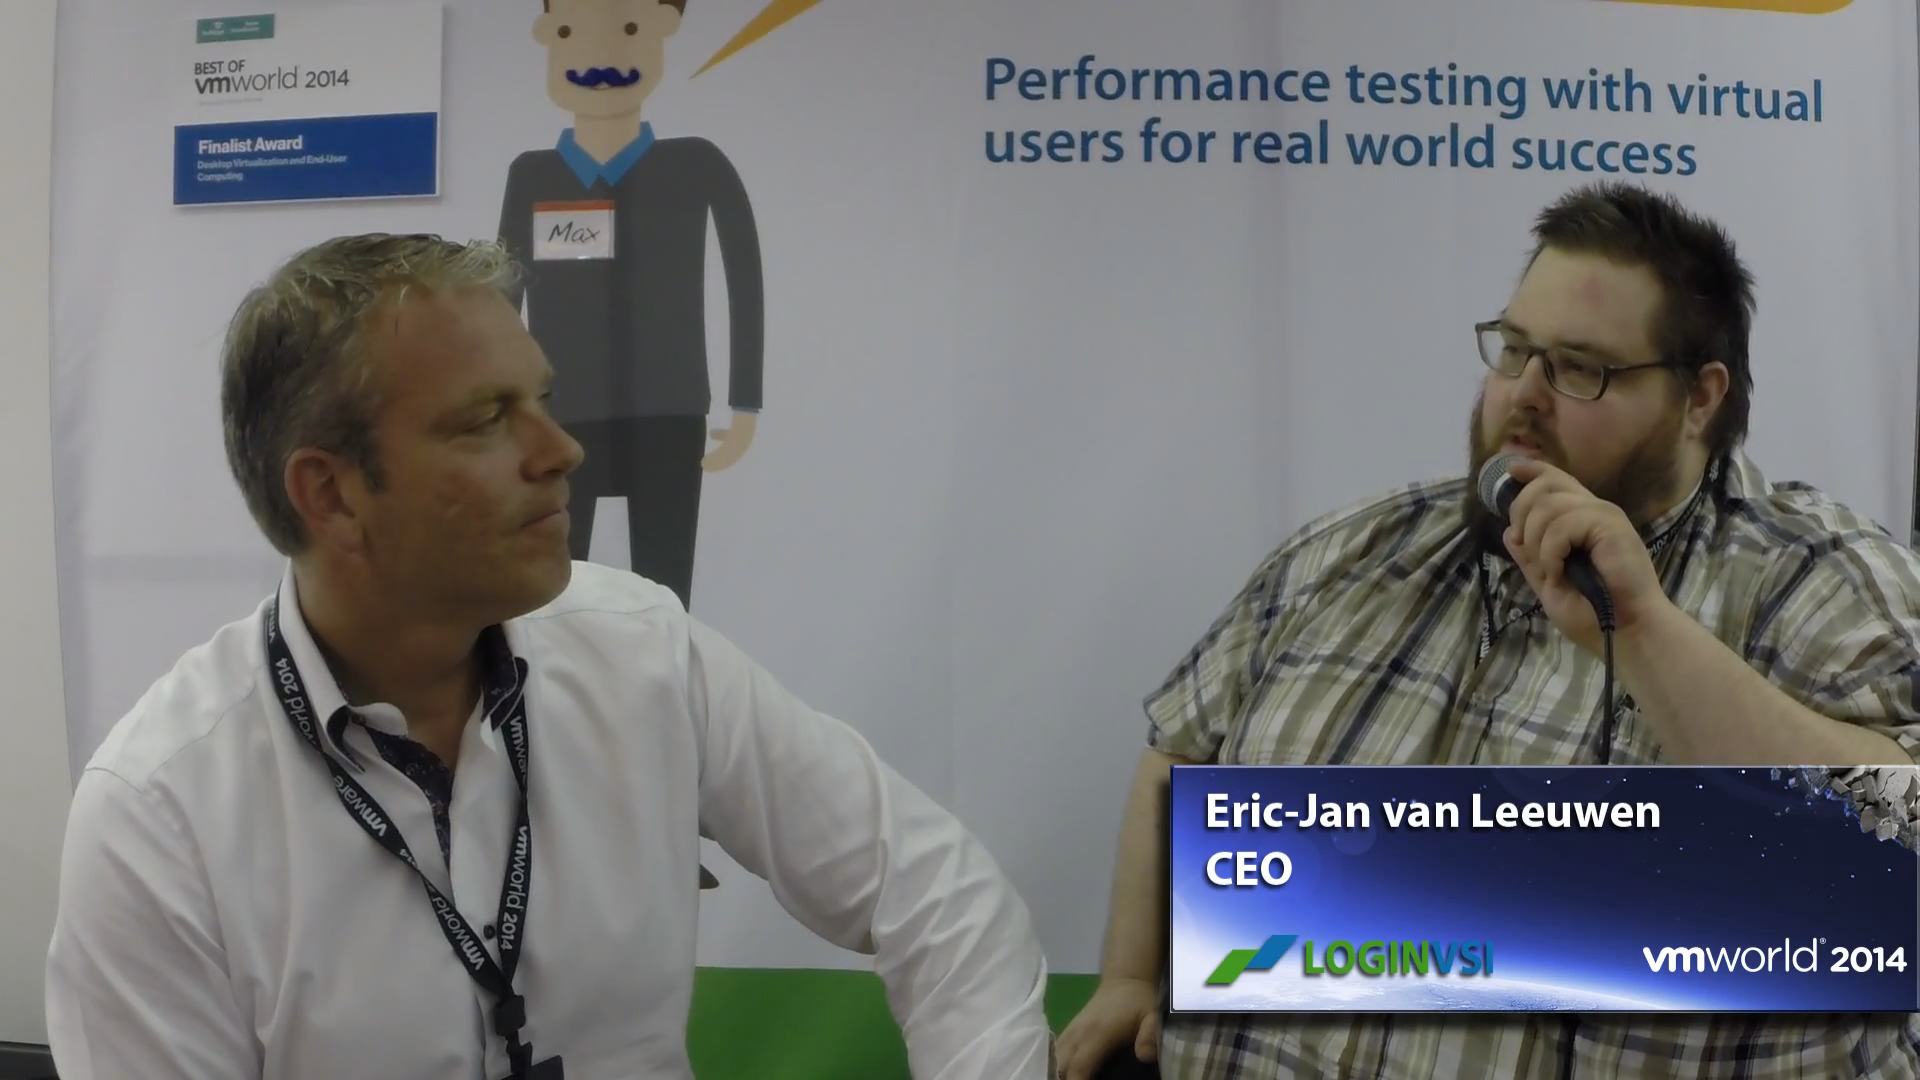 VMworld 2014 - Interview with LoginVSI's CEO Eric-Jan van Leeuwen